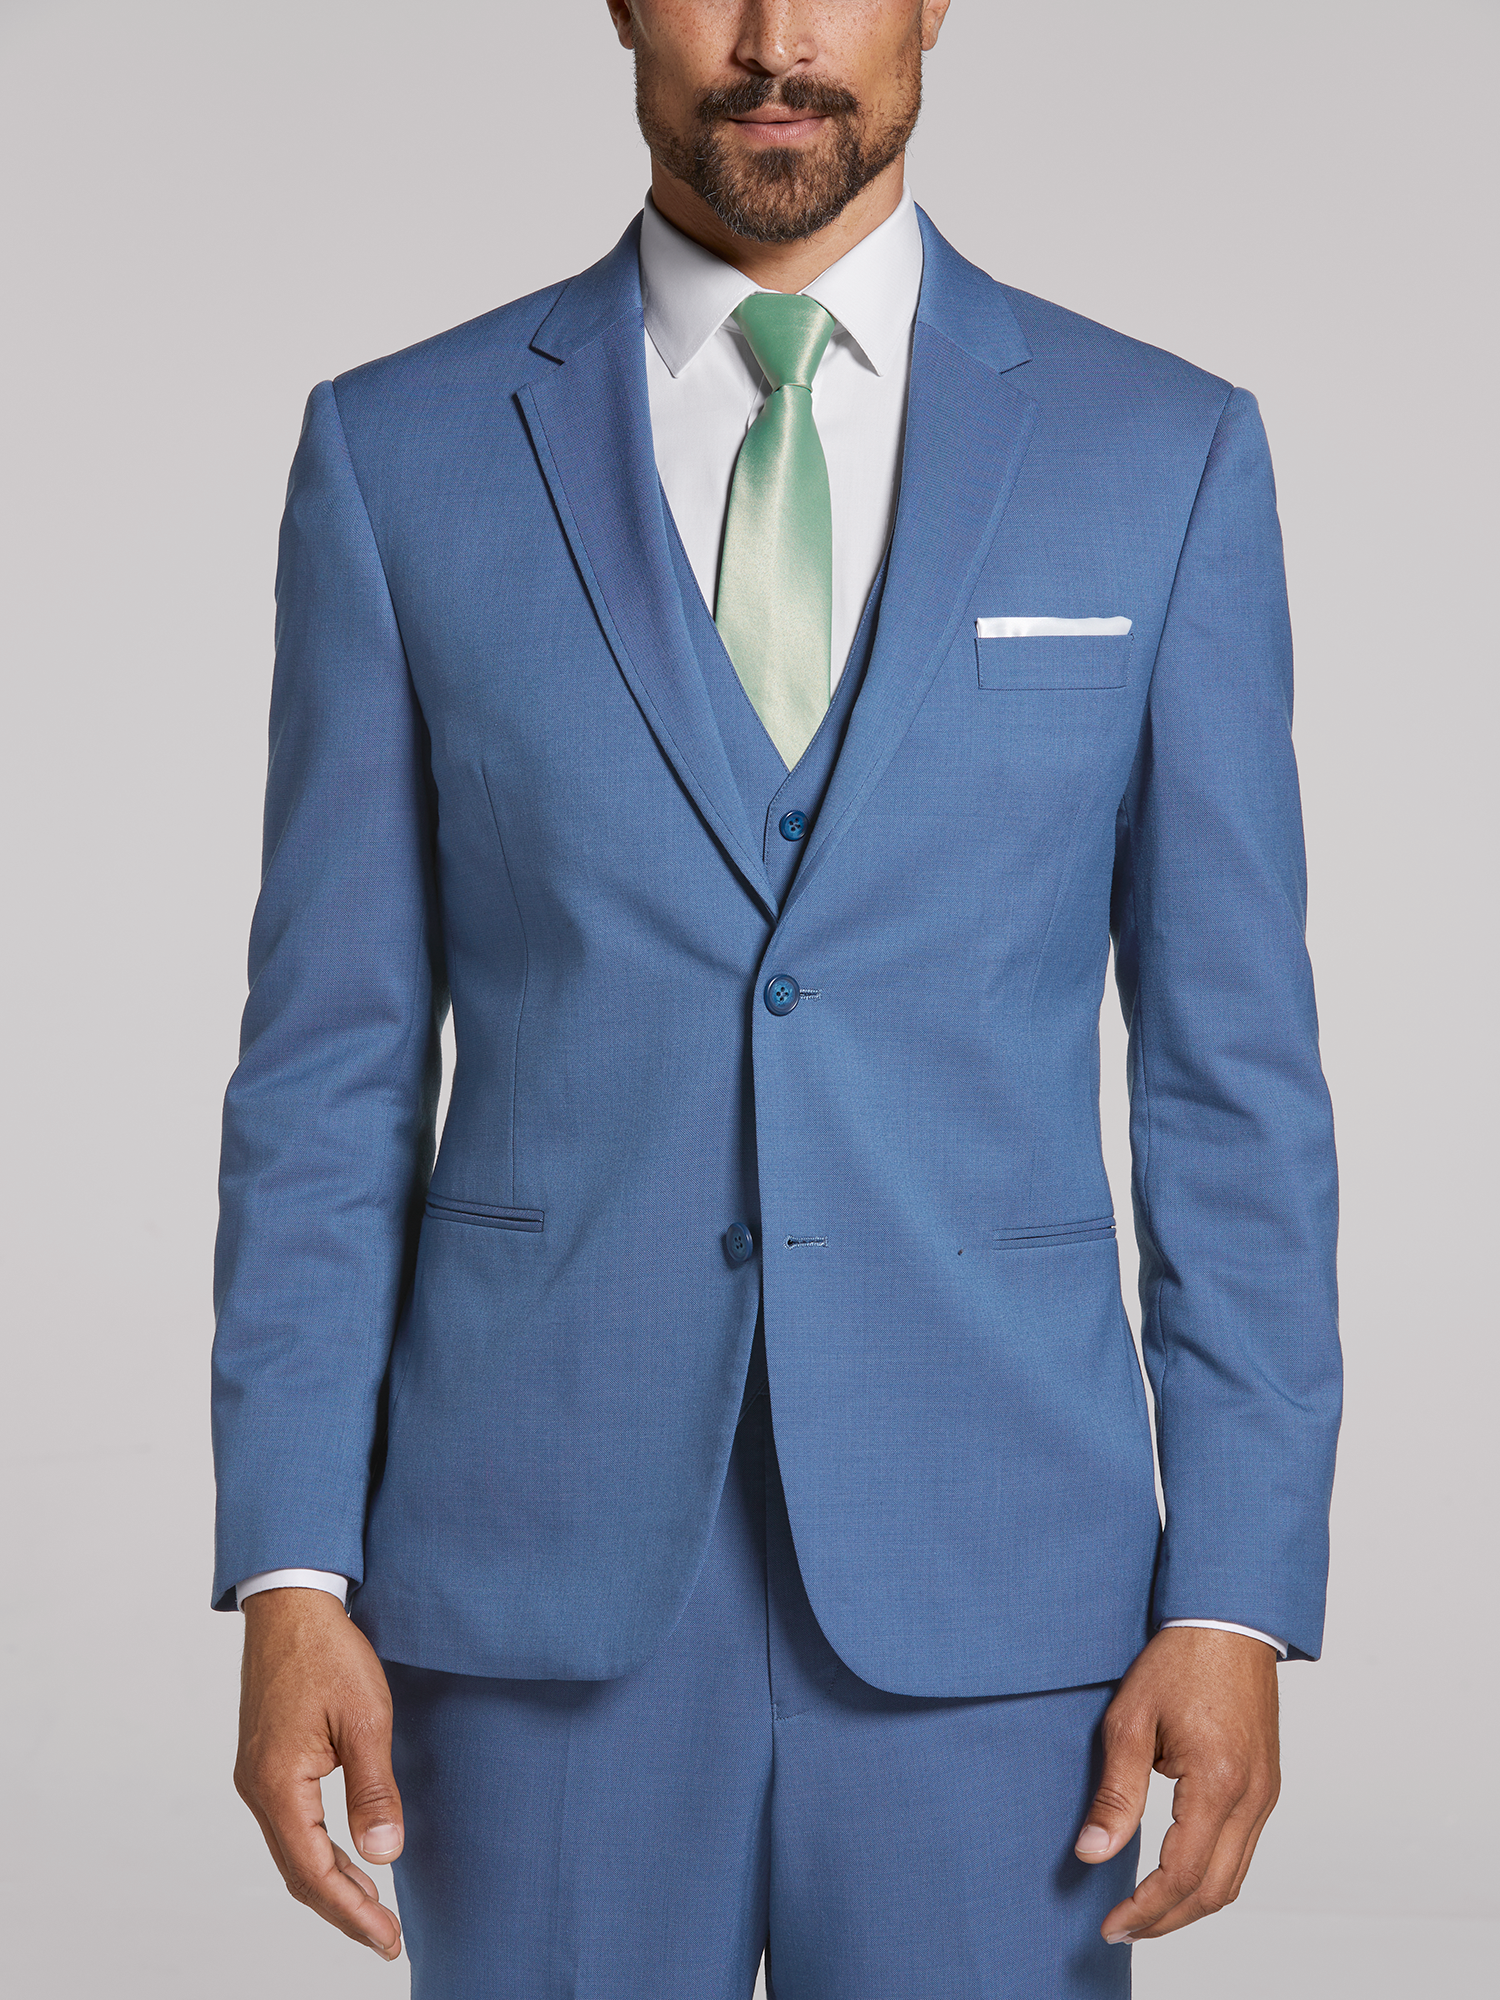 Zeeanemoon Controverse Lam Blue Performance Wedding Suit by Calvin Klein | Suit Rental